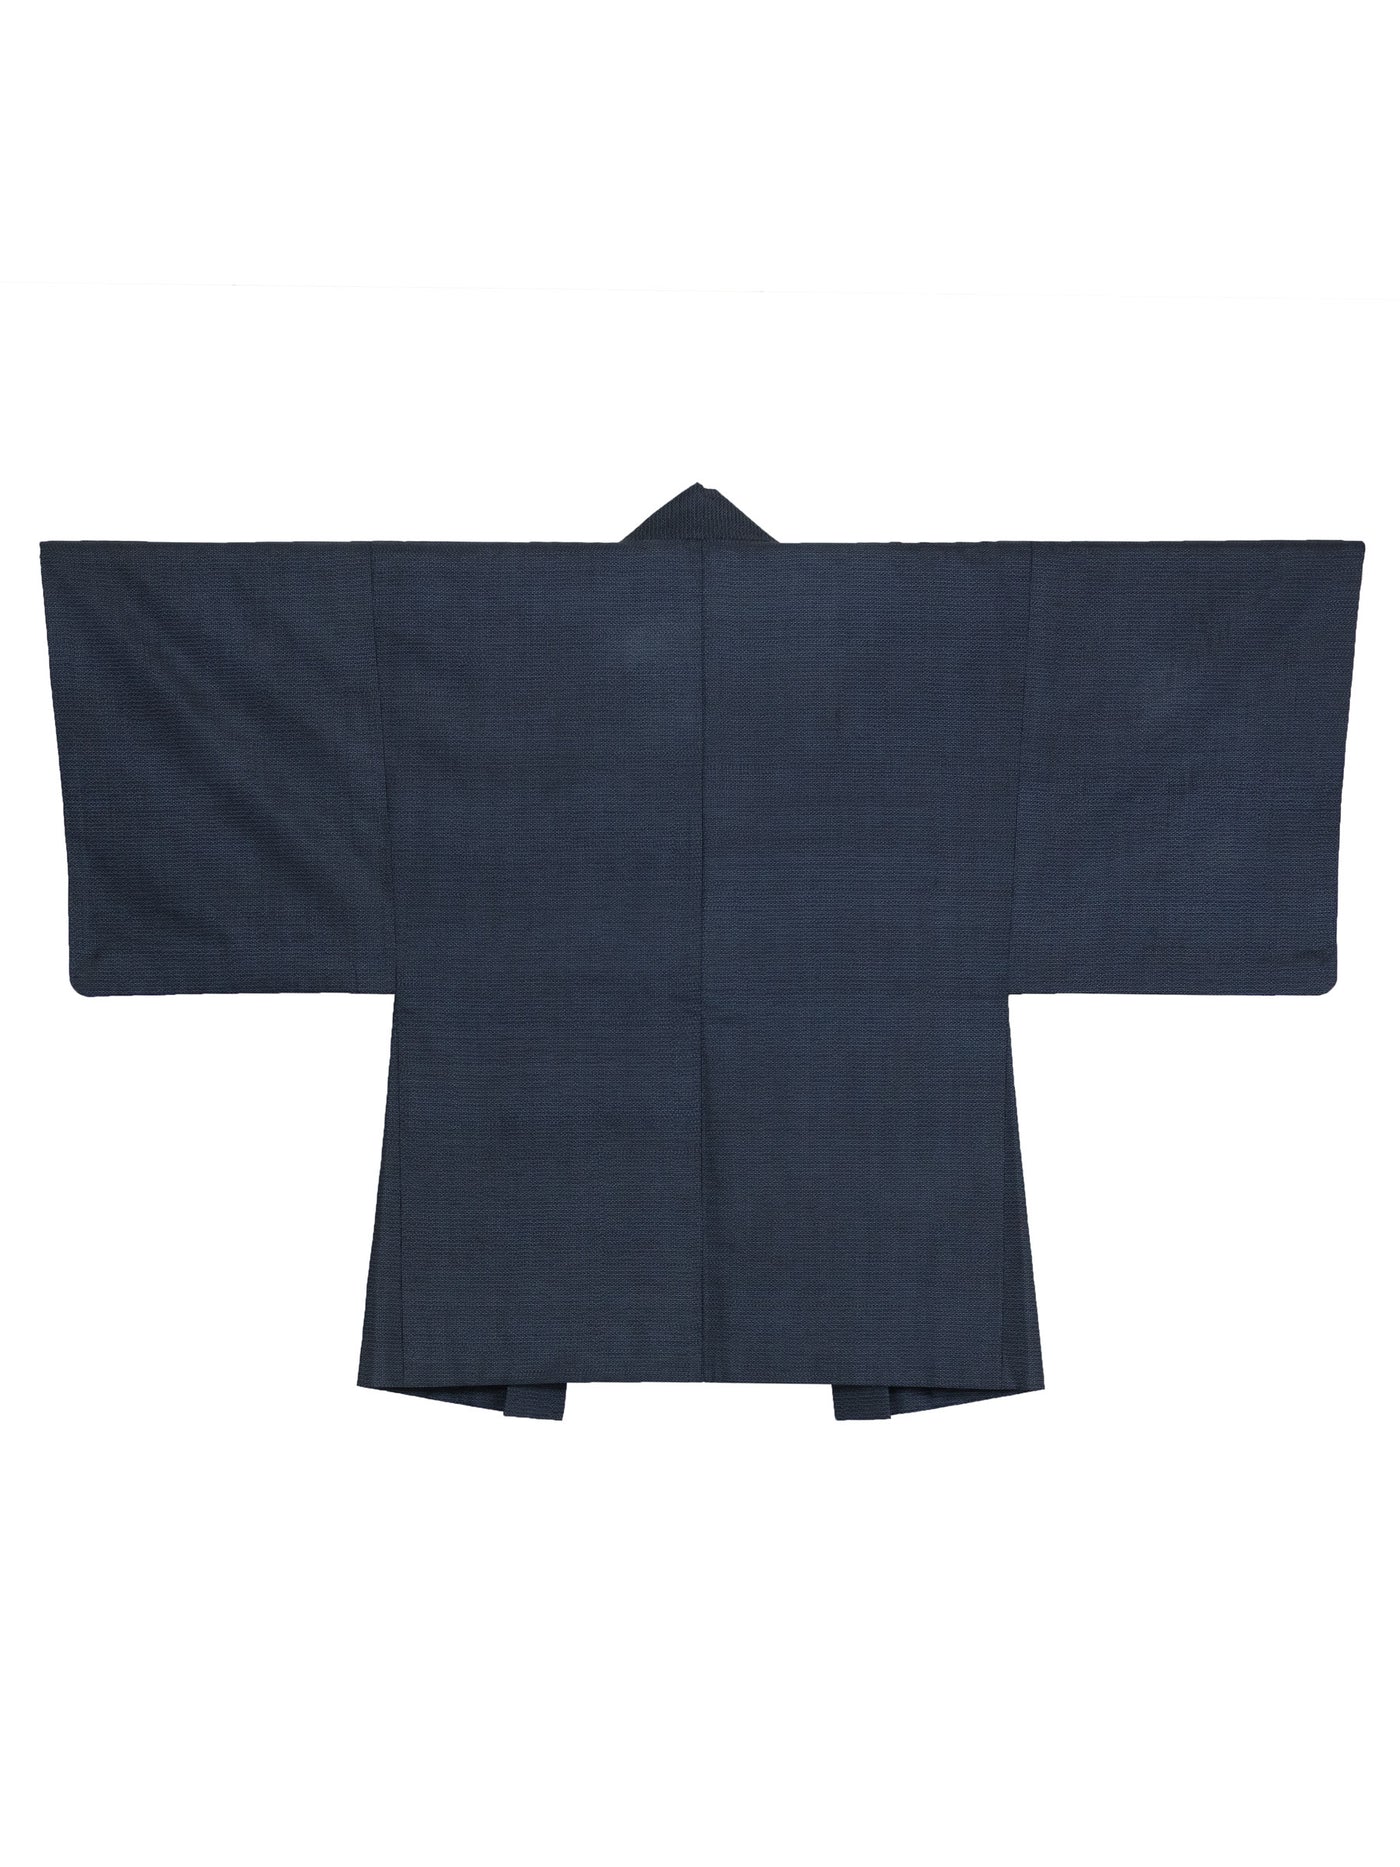 Vintage Fuji Men's Haori Jacket